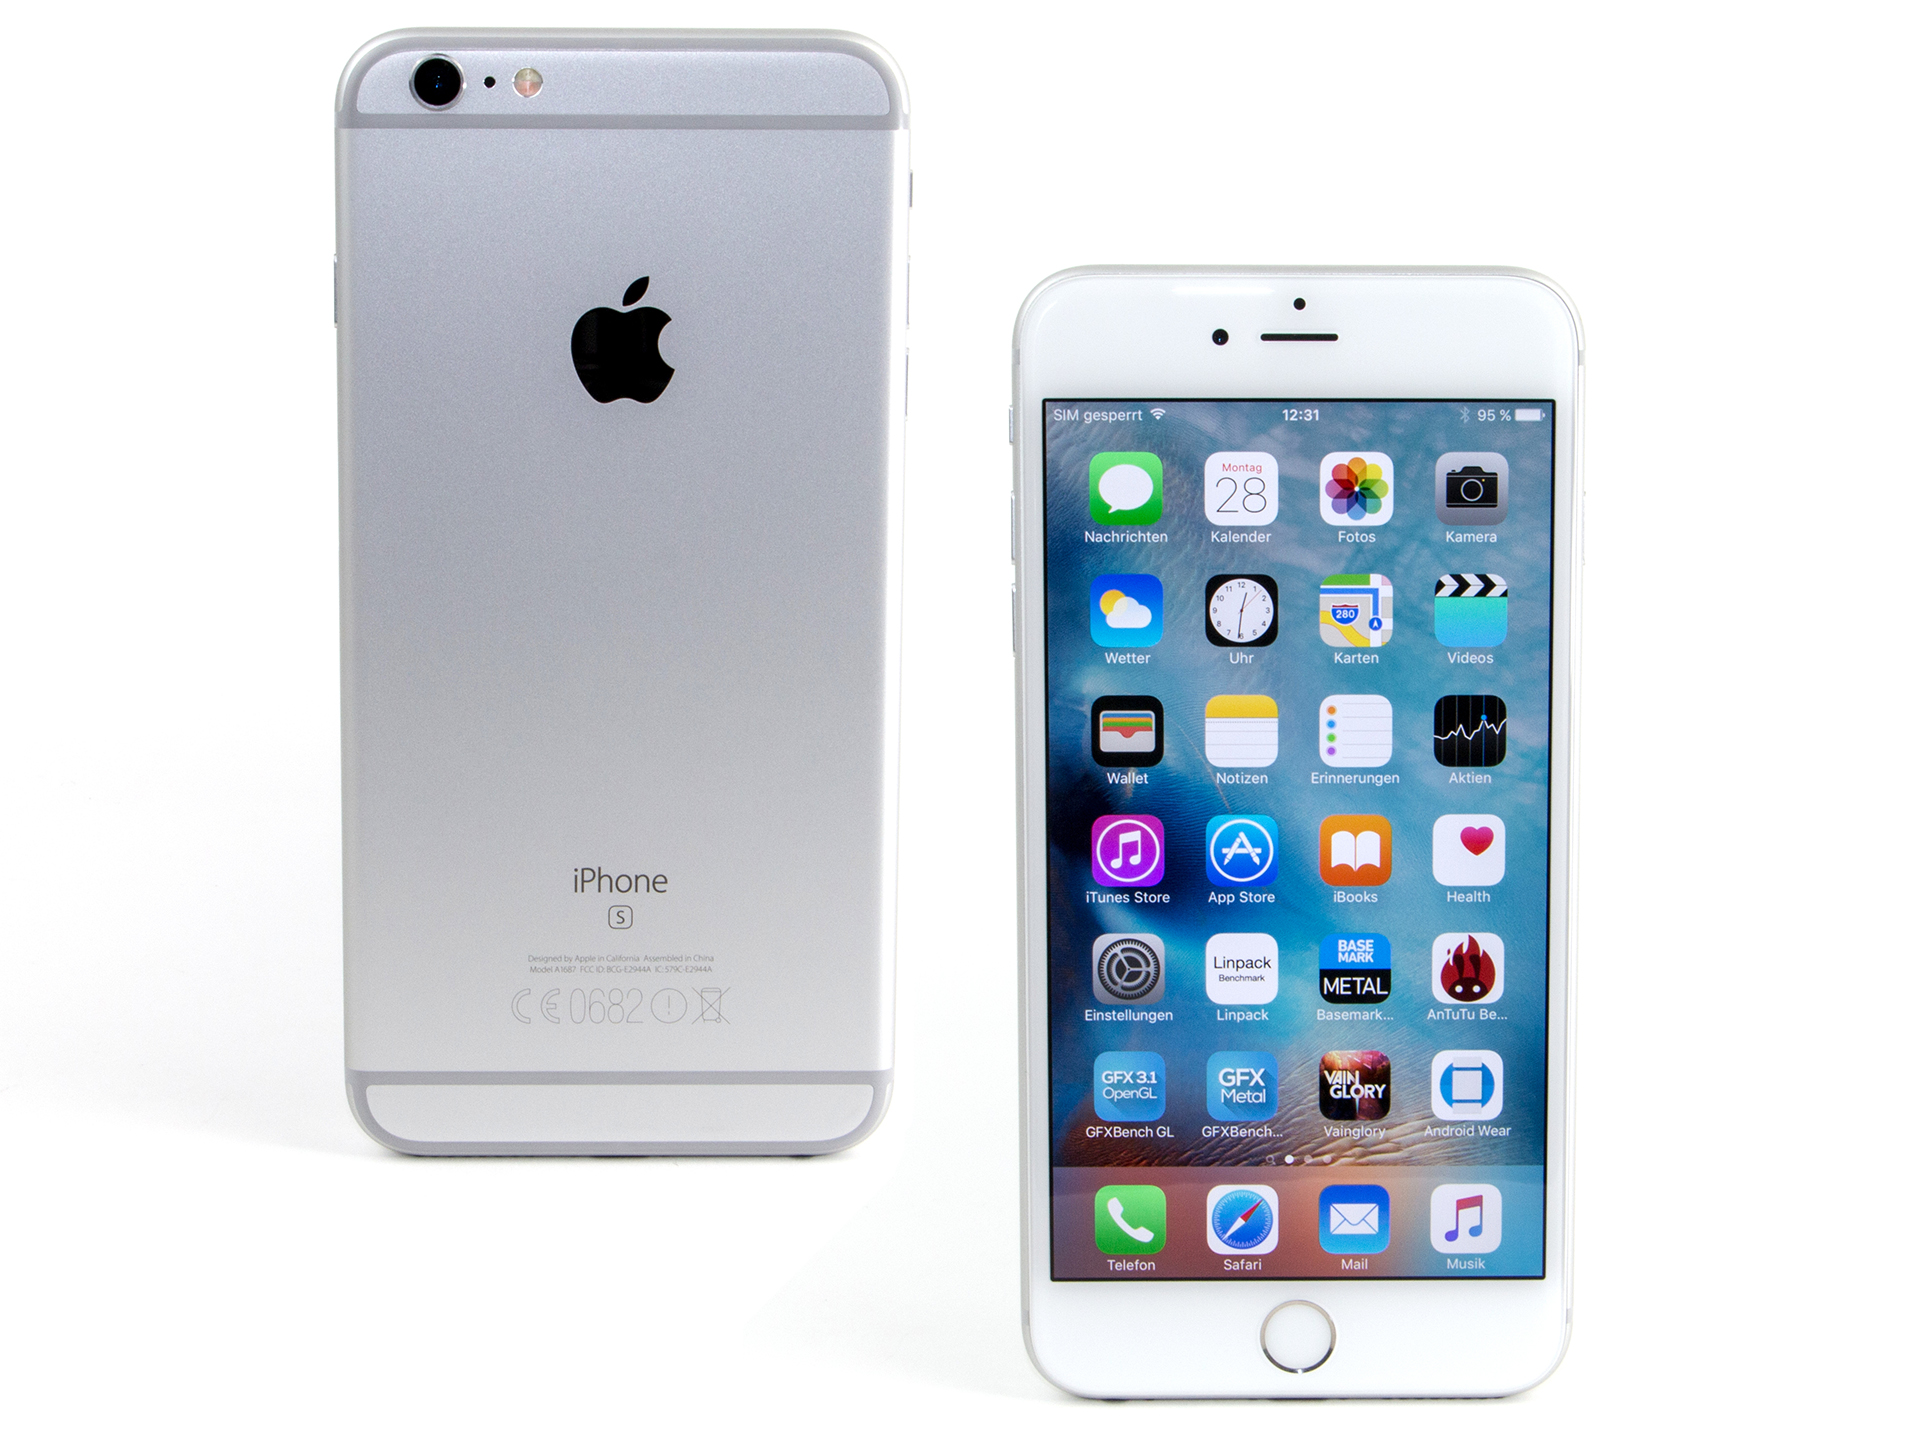 salata Olacak uç  Apple iPhone 6S Plus Smartphone Review - NotebookCheck.net Reviews